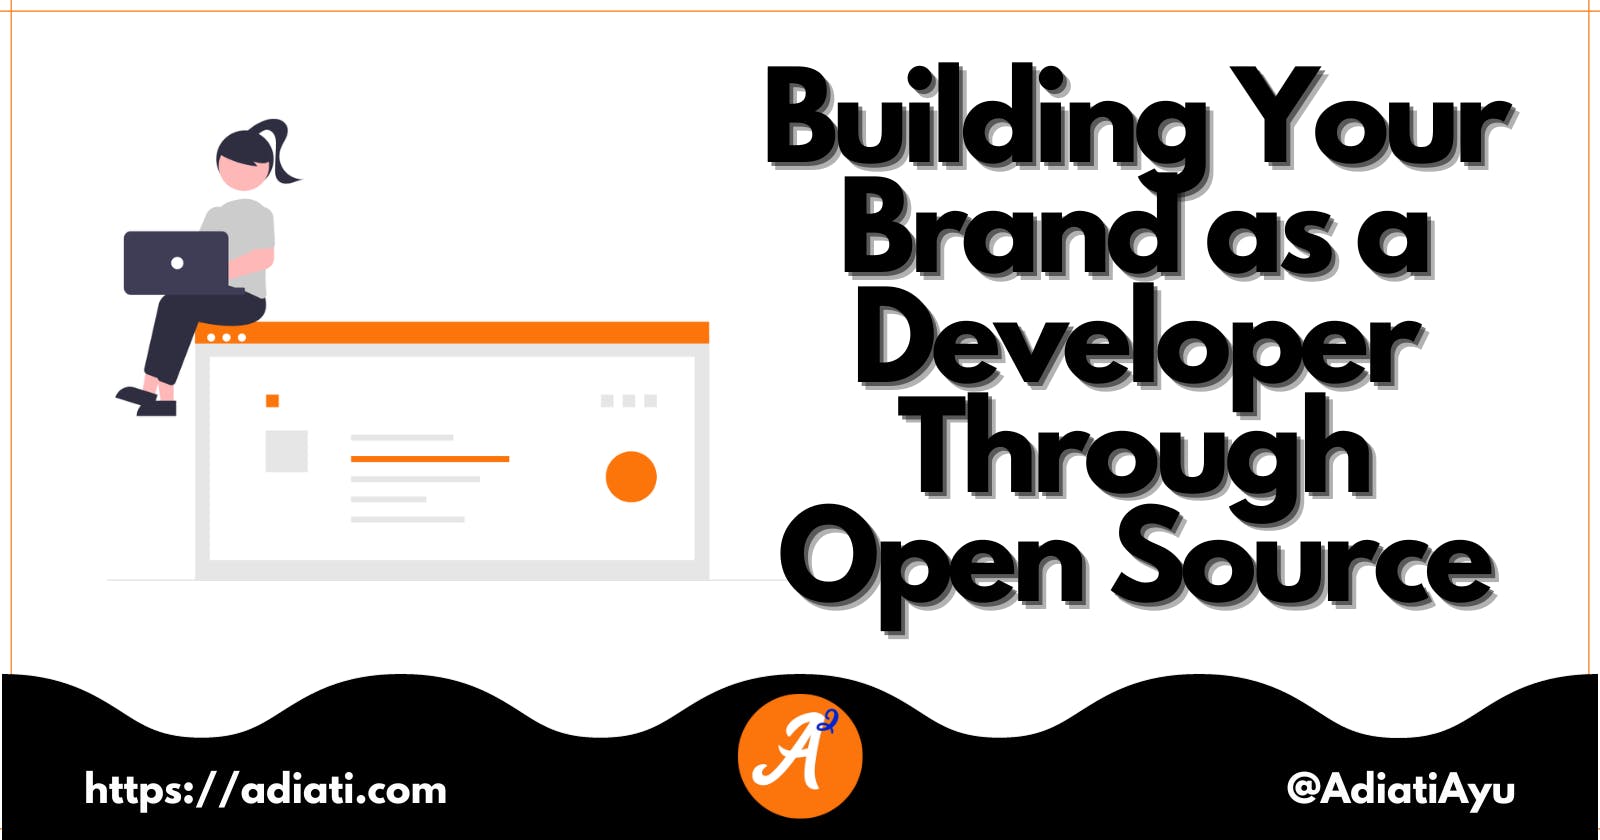 Building Your Brand as a Developer Through Open Source